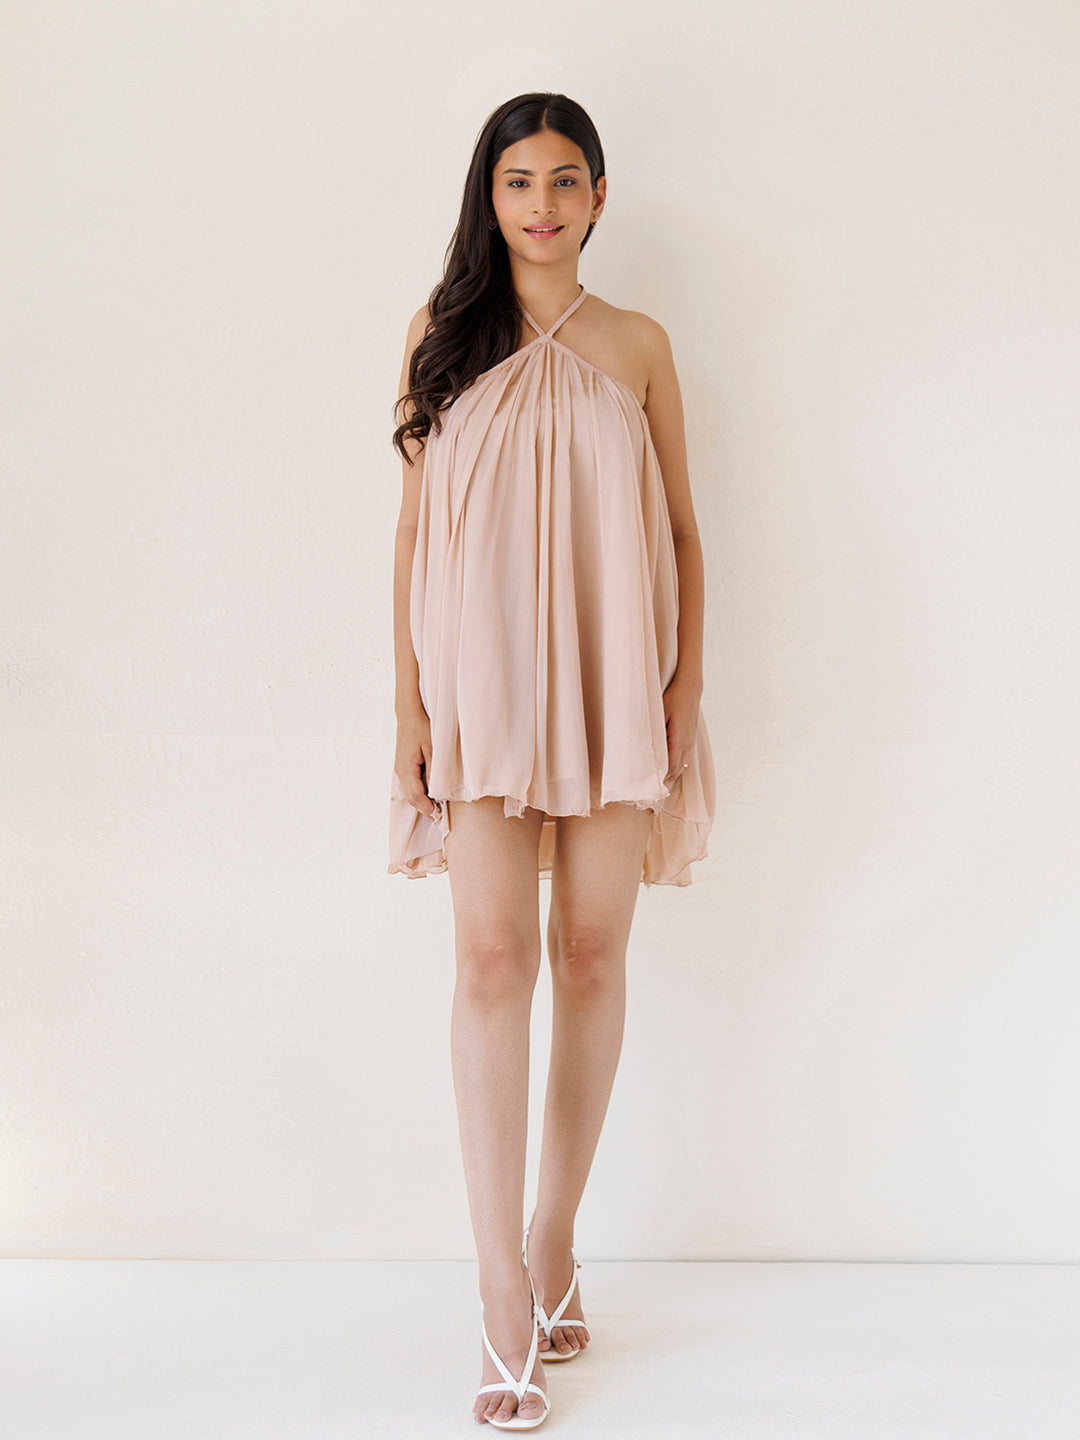 Rose Tiffany Nude Chiffon Mini Dress by ragavi